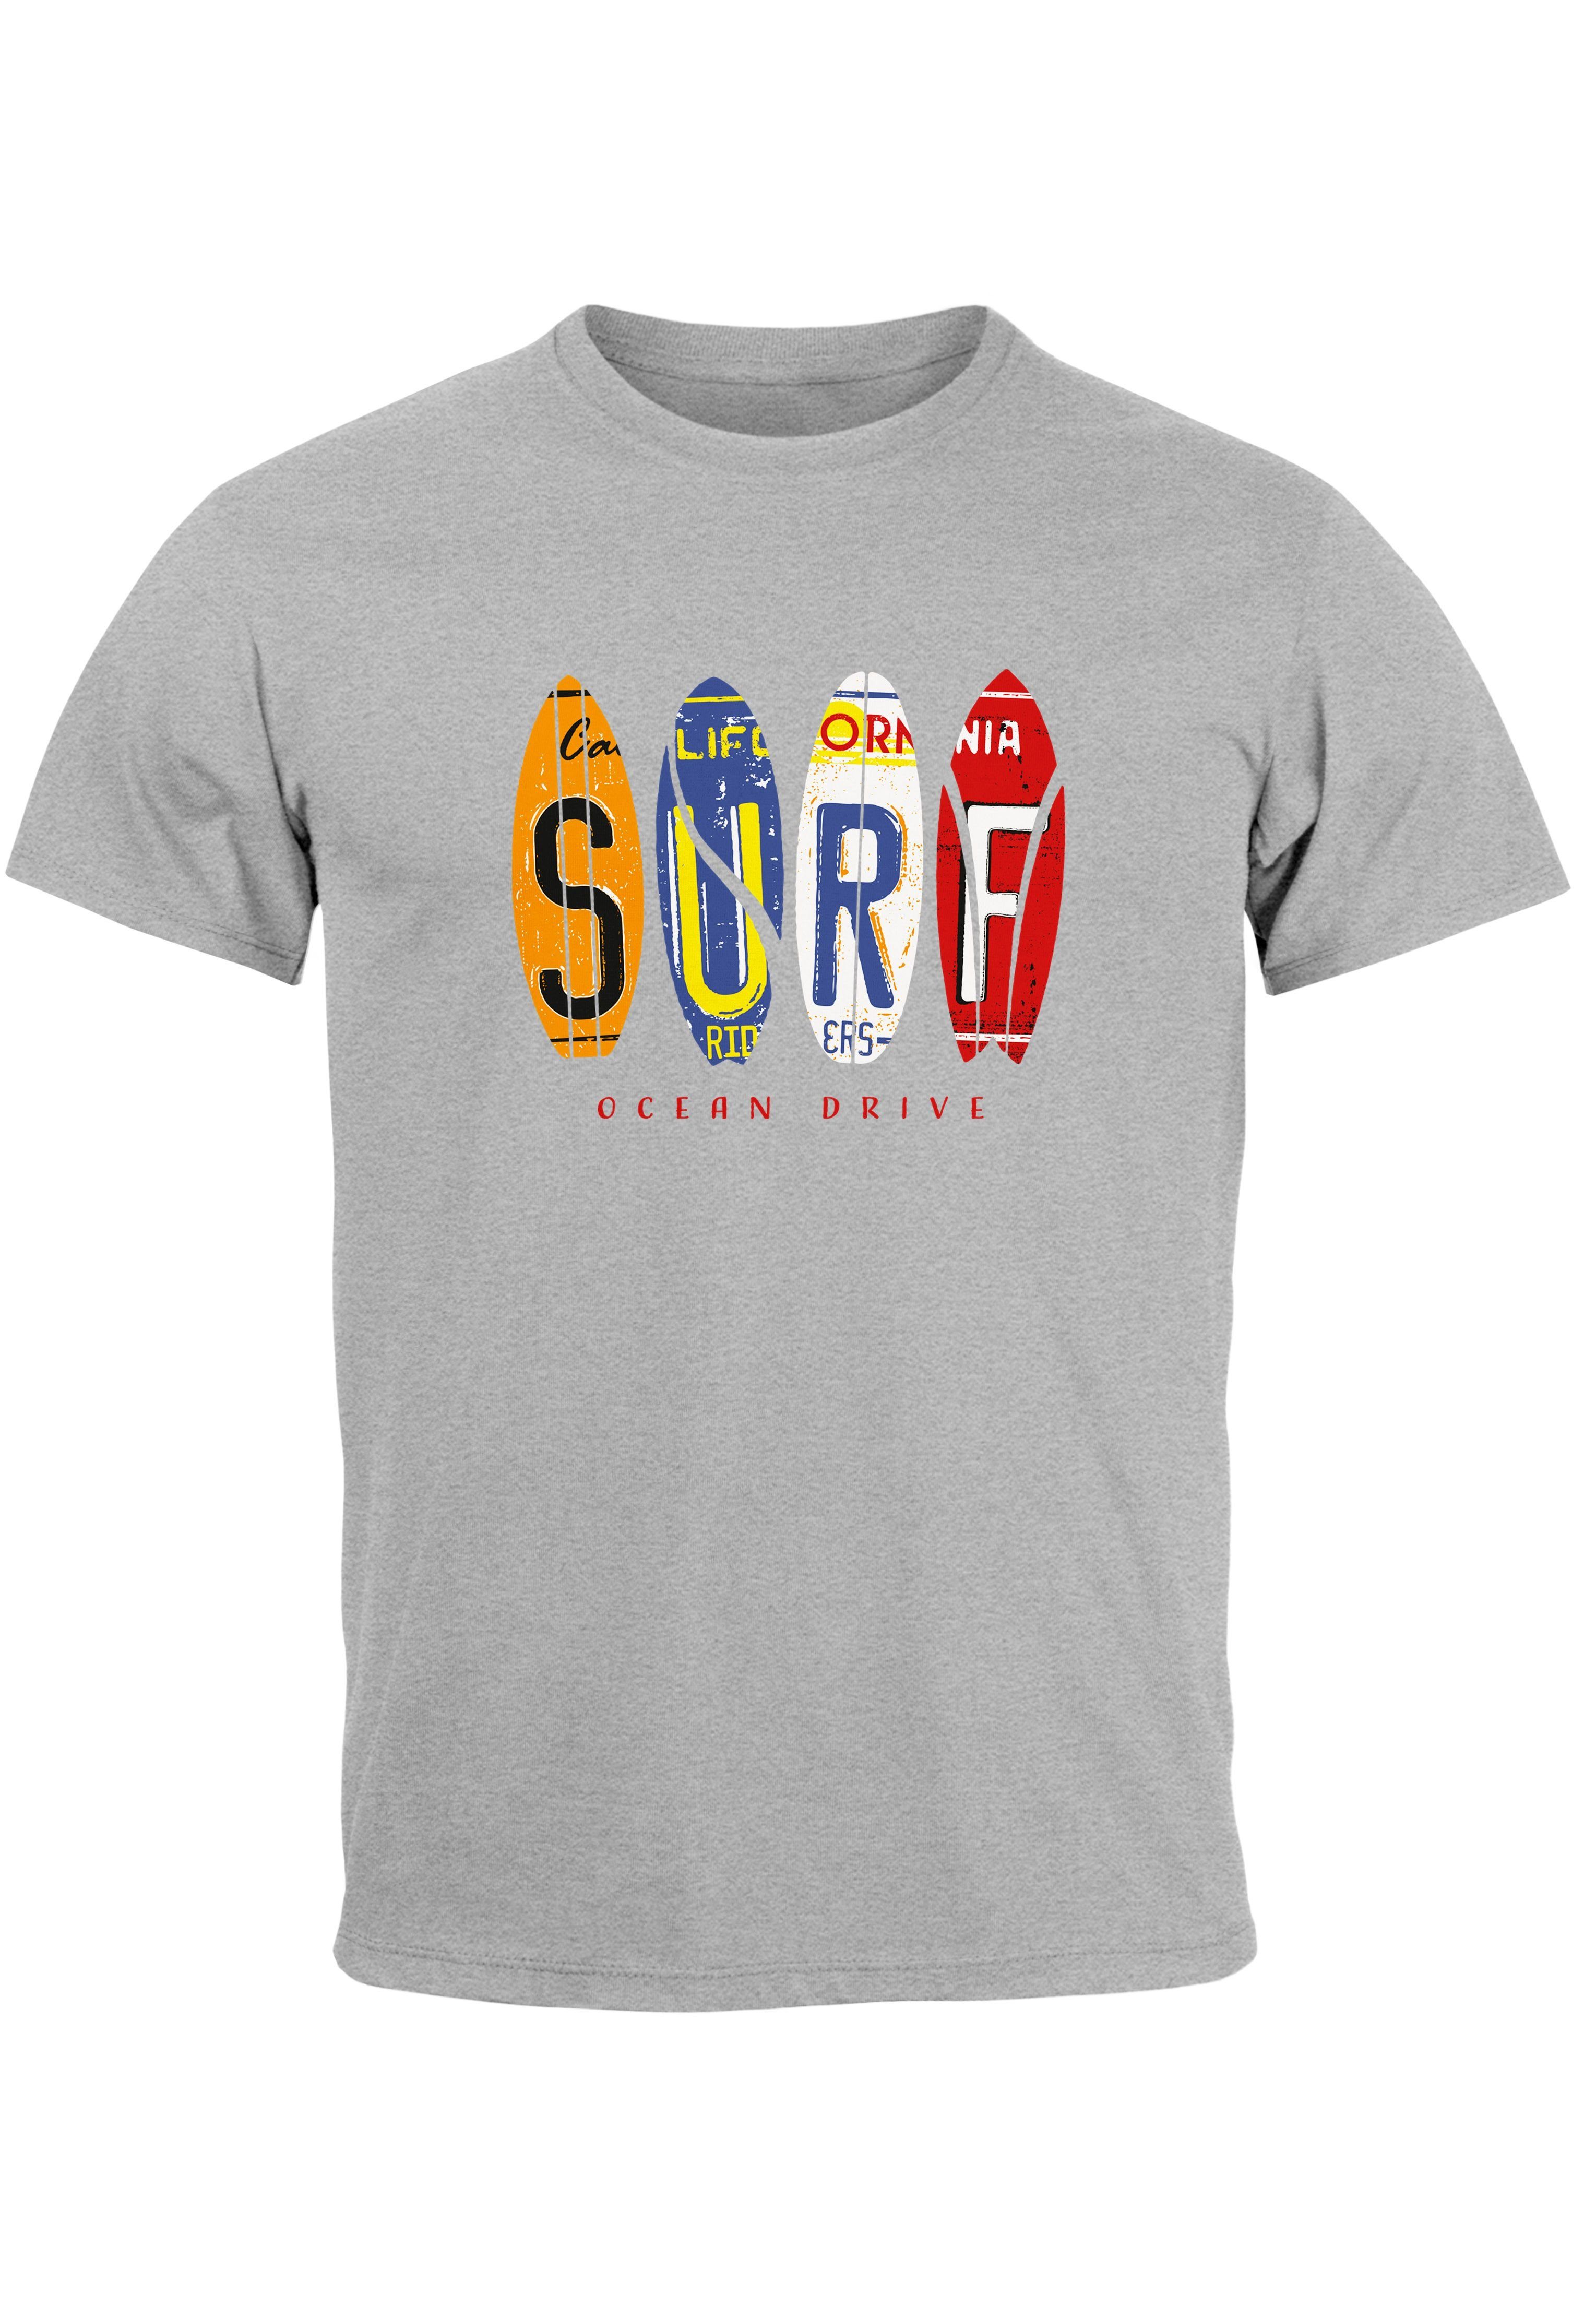 Print California T-Shirt grau Print Print-Shirt Surfing Surfboards Sommer mit Neverless Drive Ocean Herren